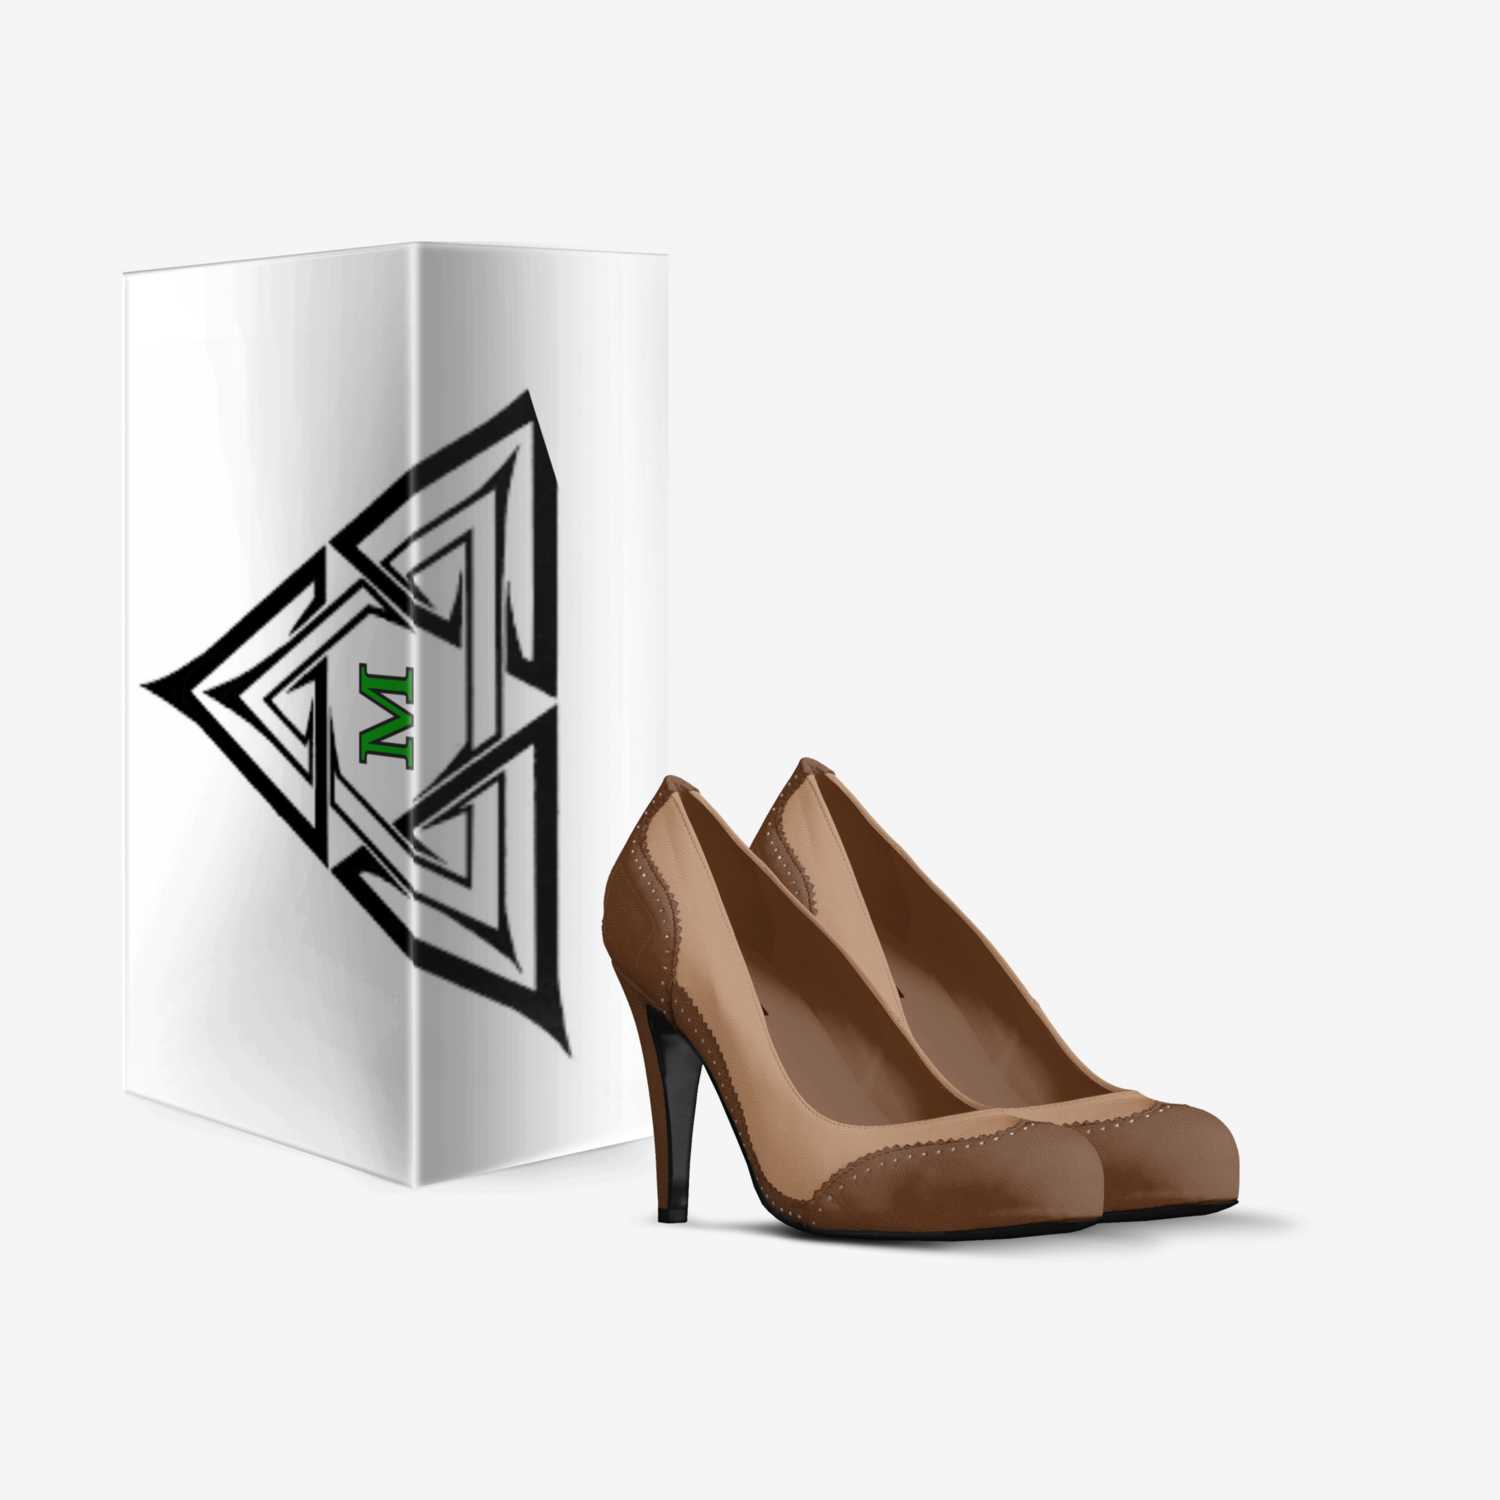 Murphnetti H custom made in Italy shoes by Tyriek Murphy | Box view